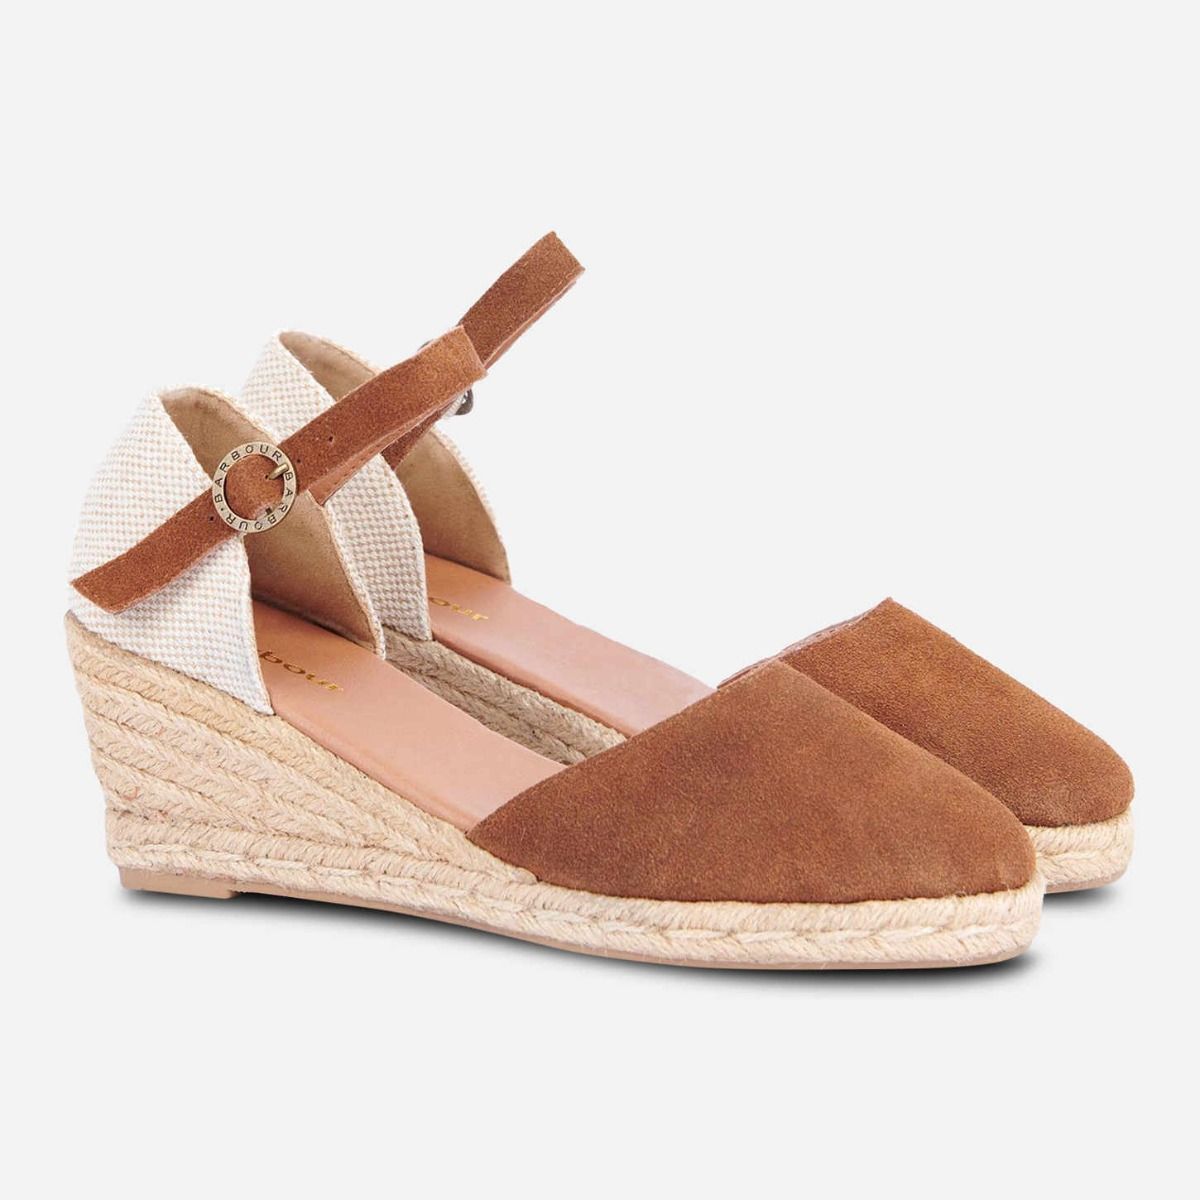 RAFE NY platform wedge shoes heels patent $315 brown patent leather –  Jenifers Designer Closet